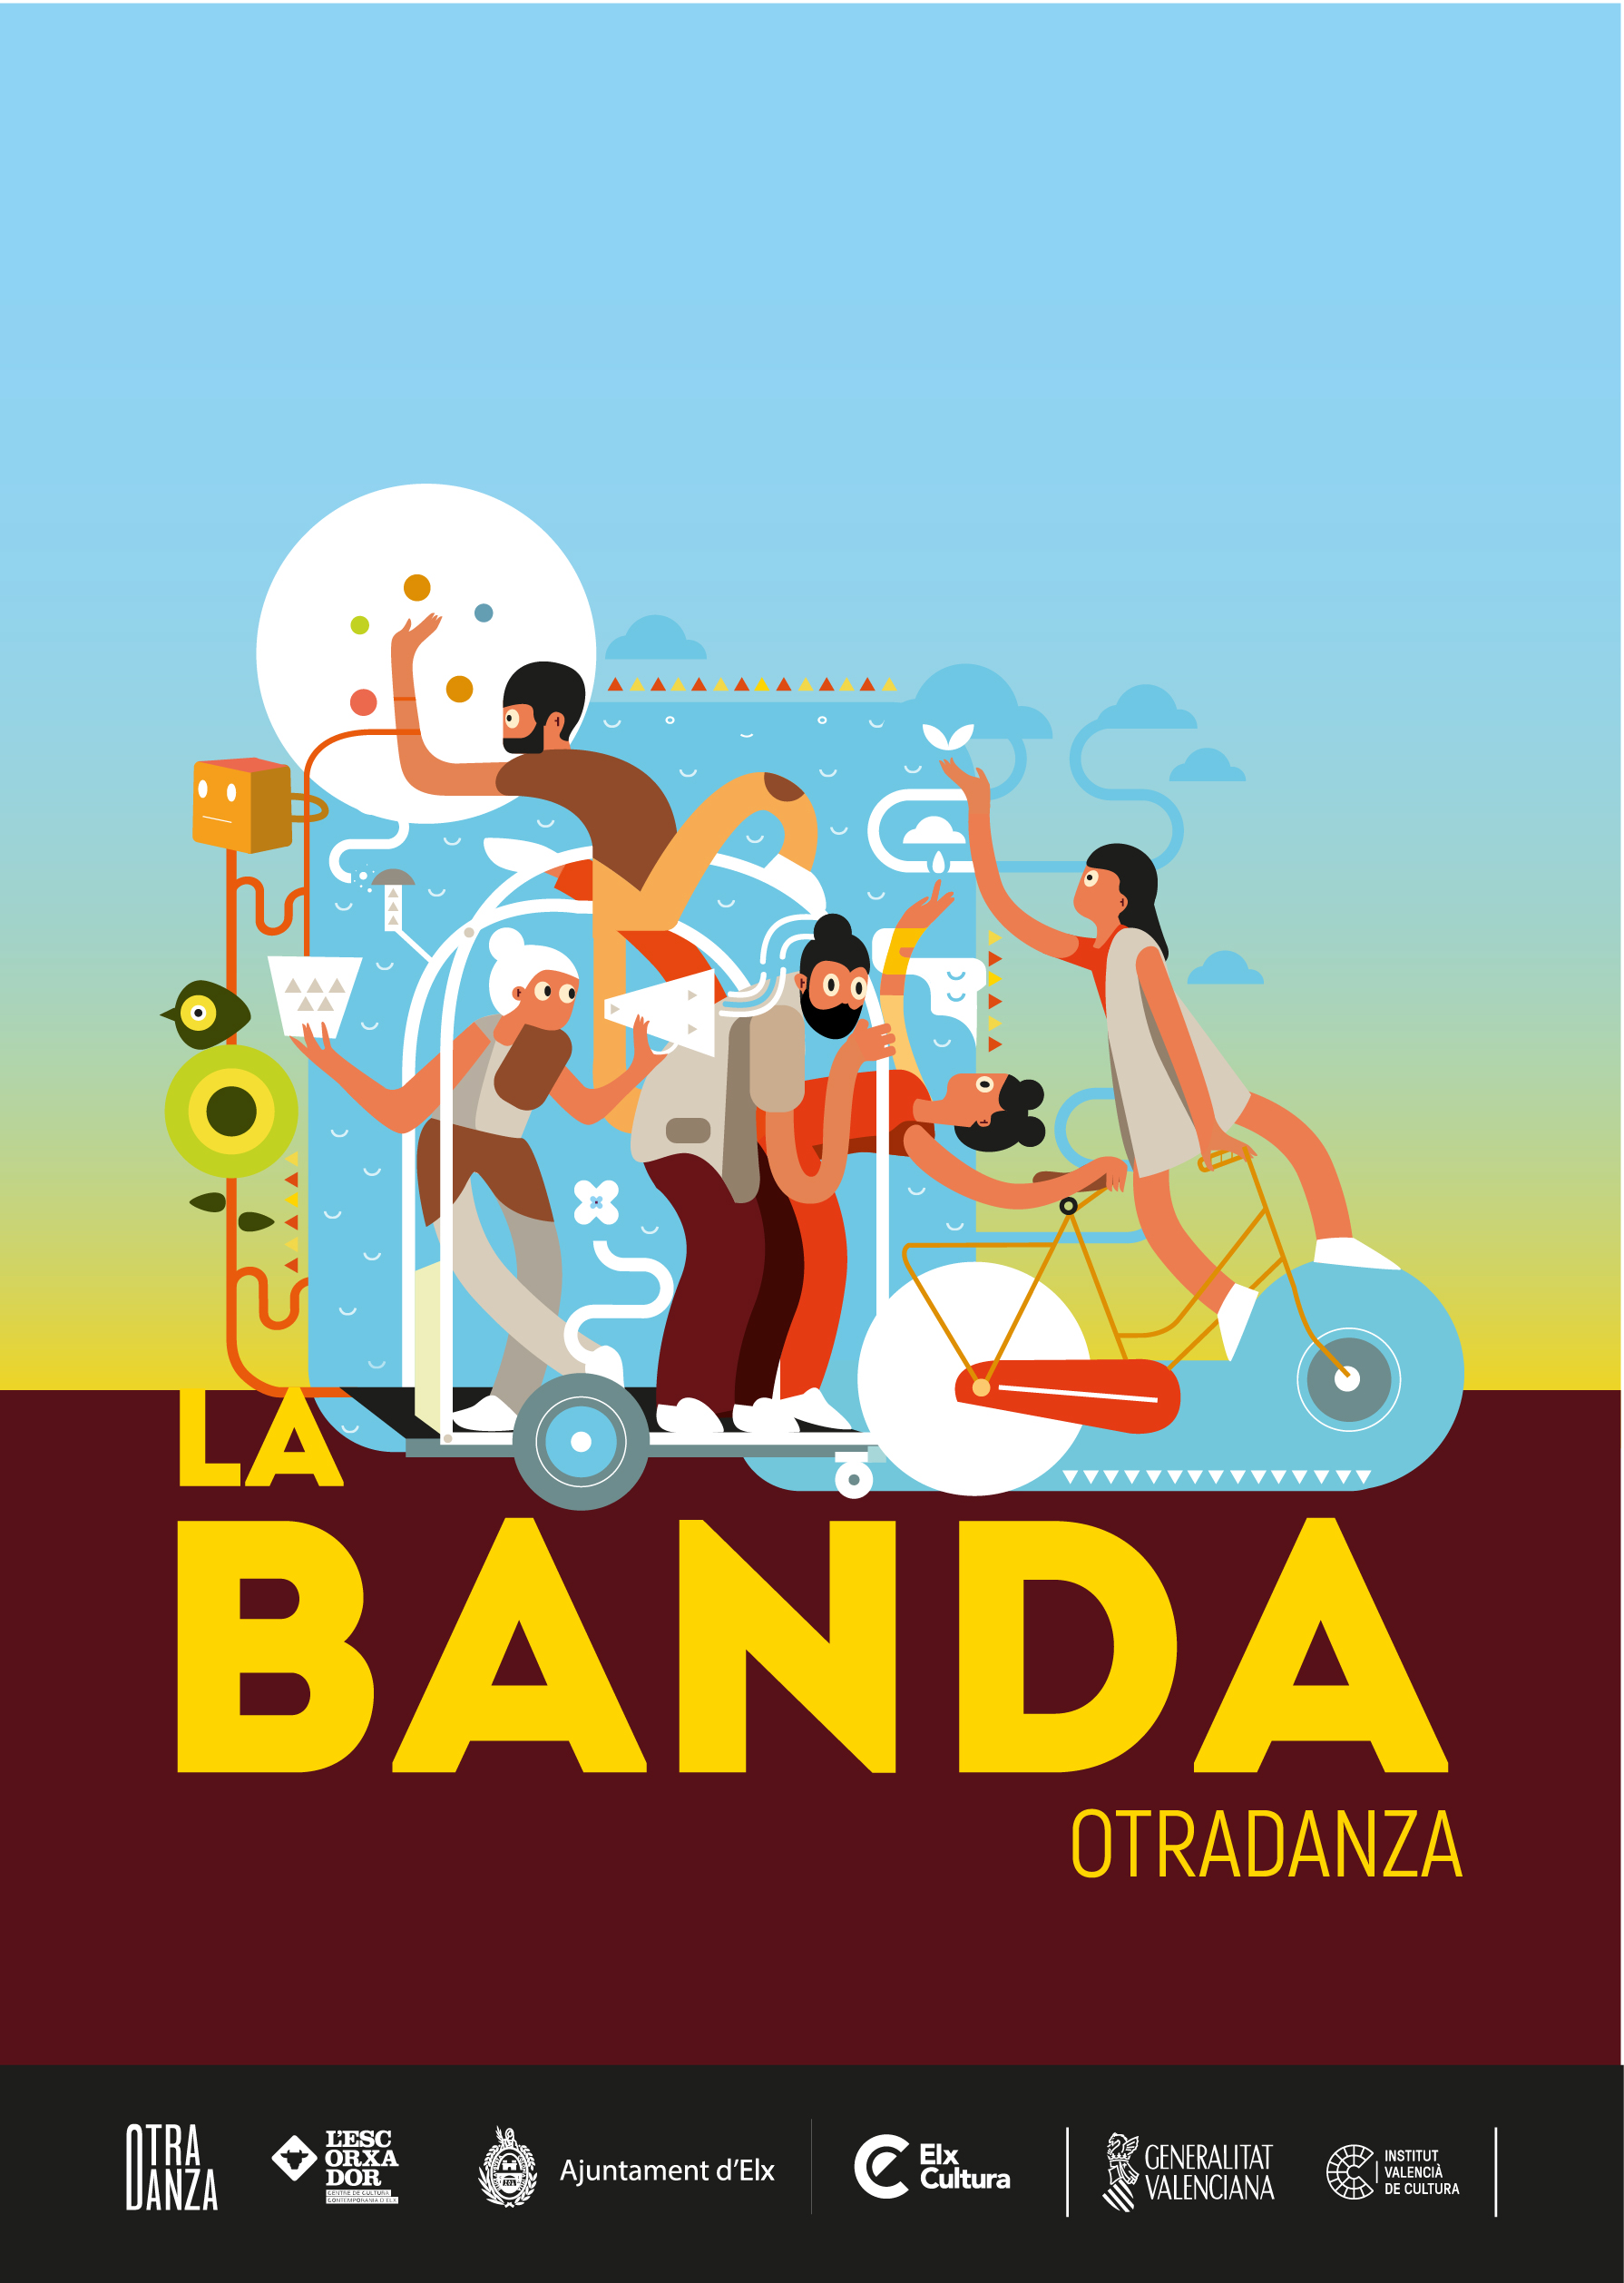 LA BANDA - OTRADANZA